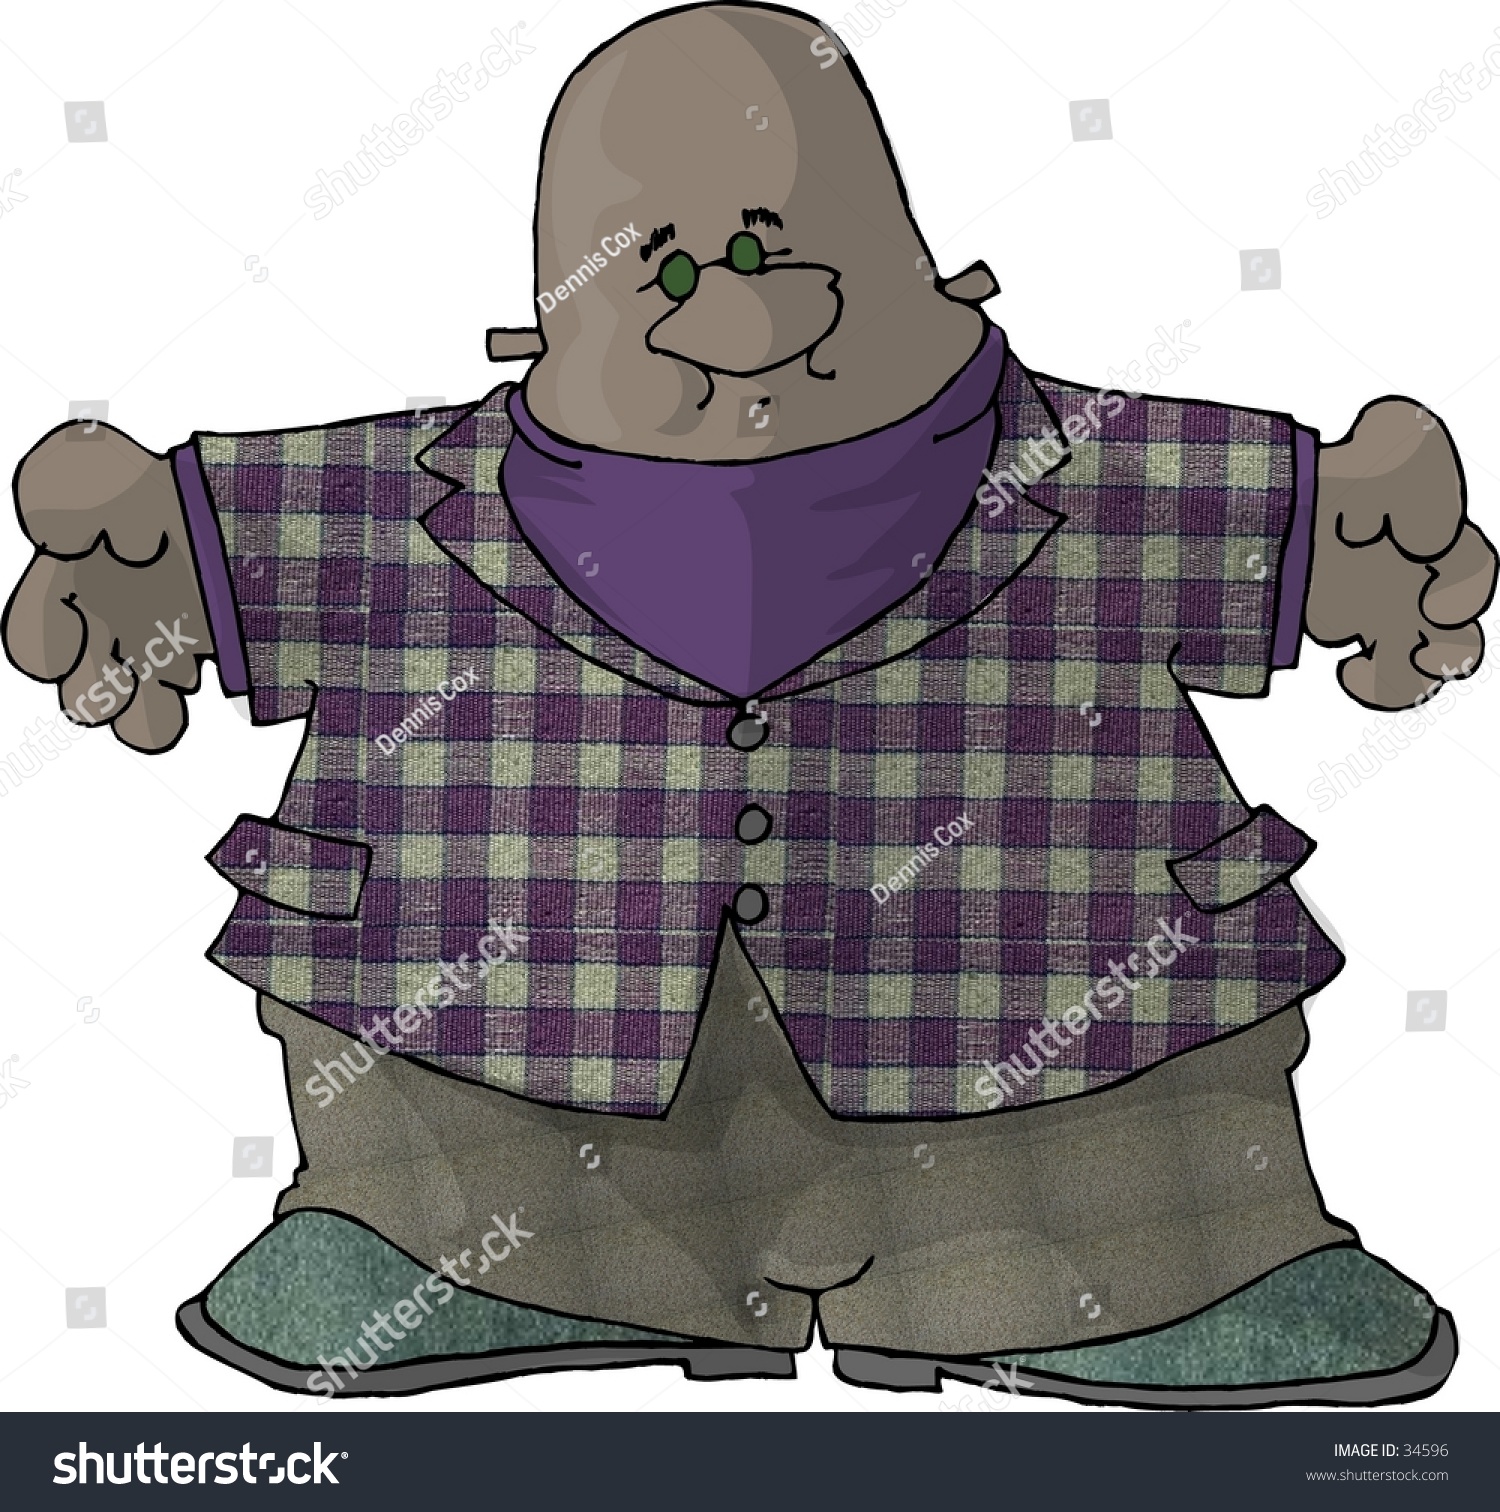 Clipart Illustration Of A Fat Man - 34596 : Shutterstock